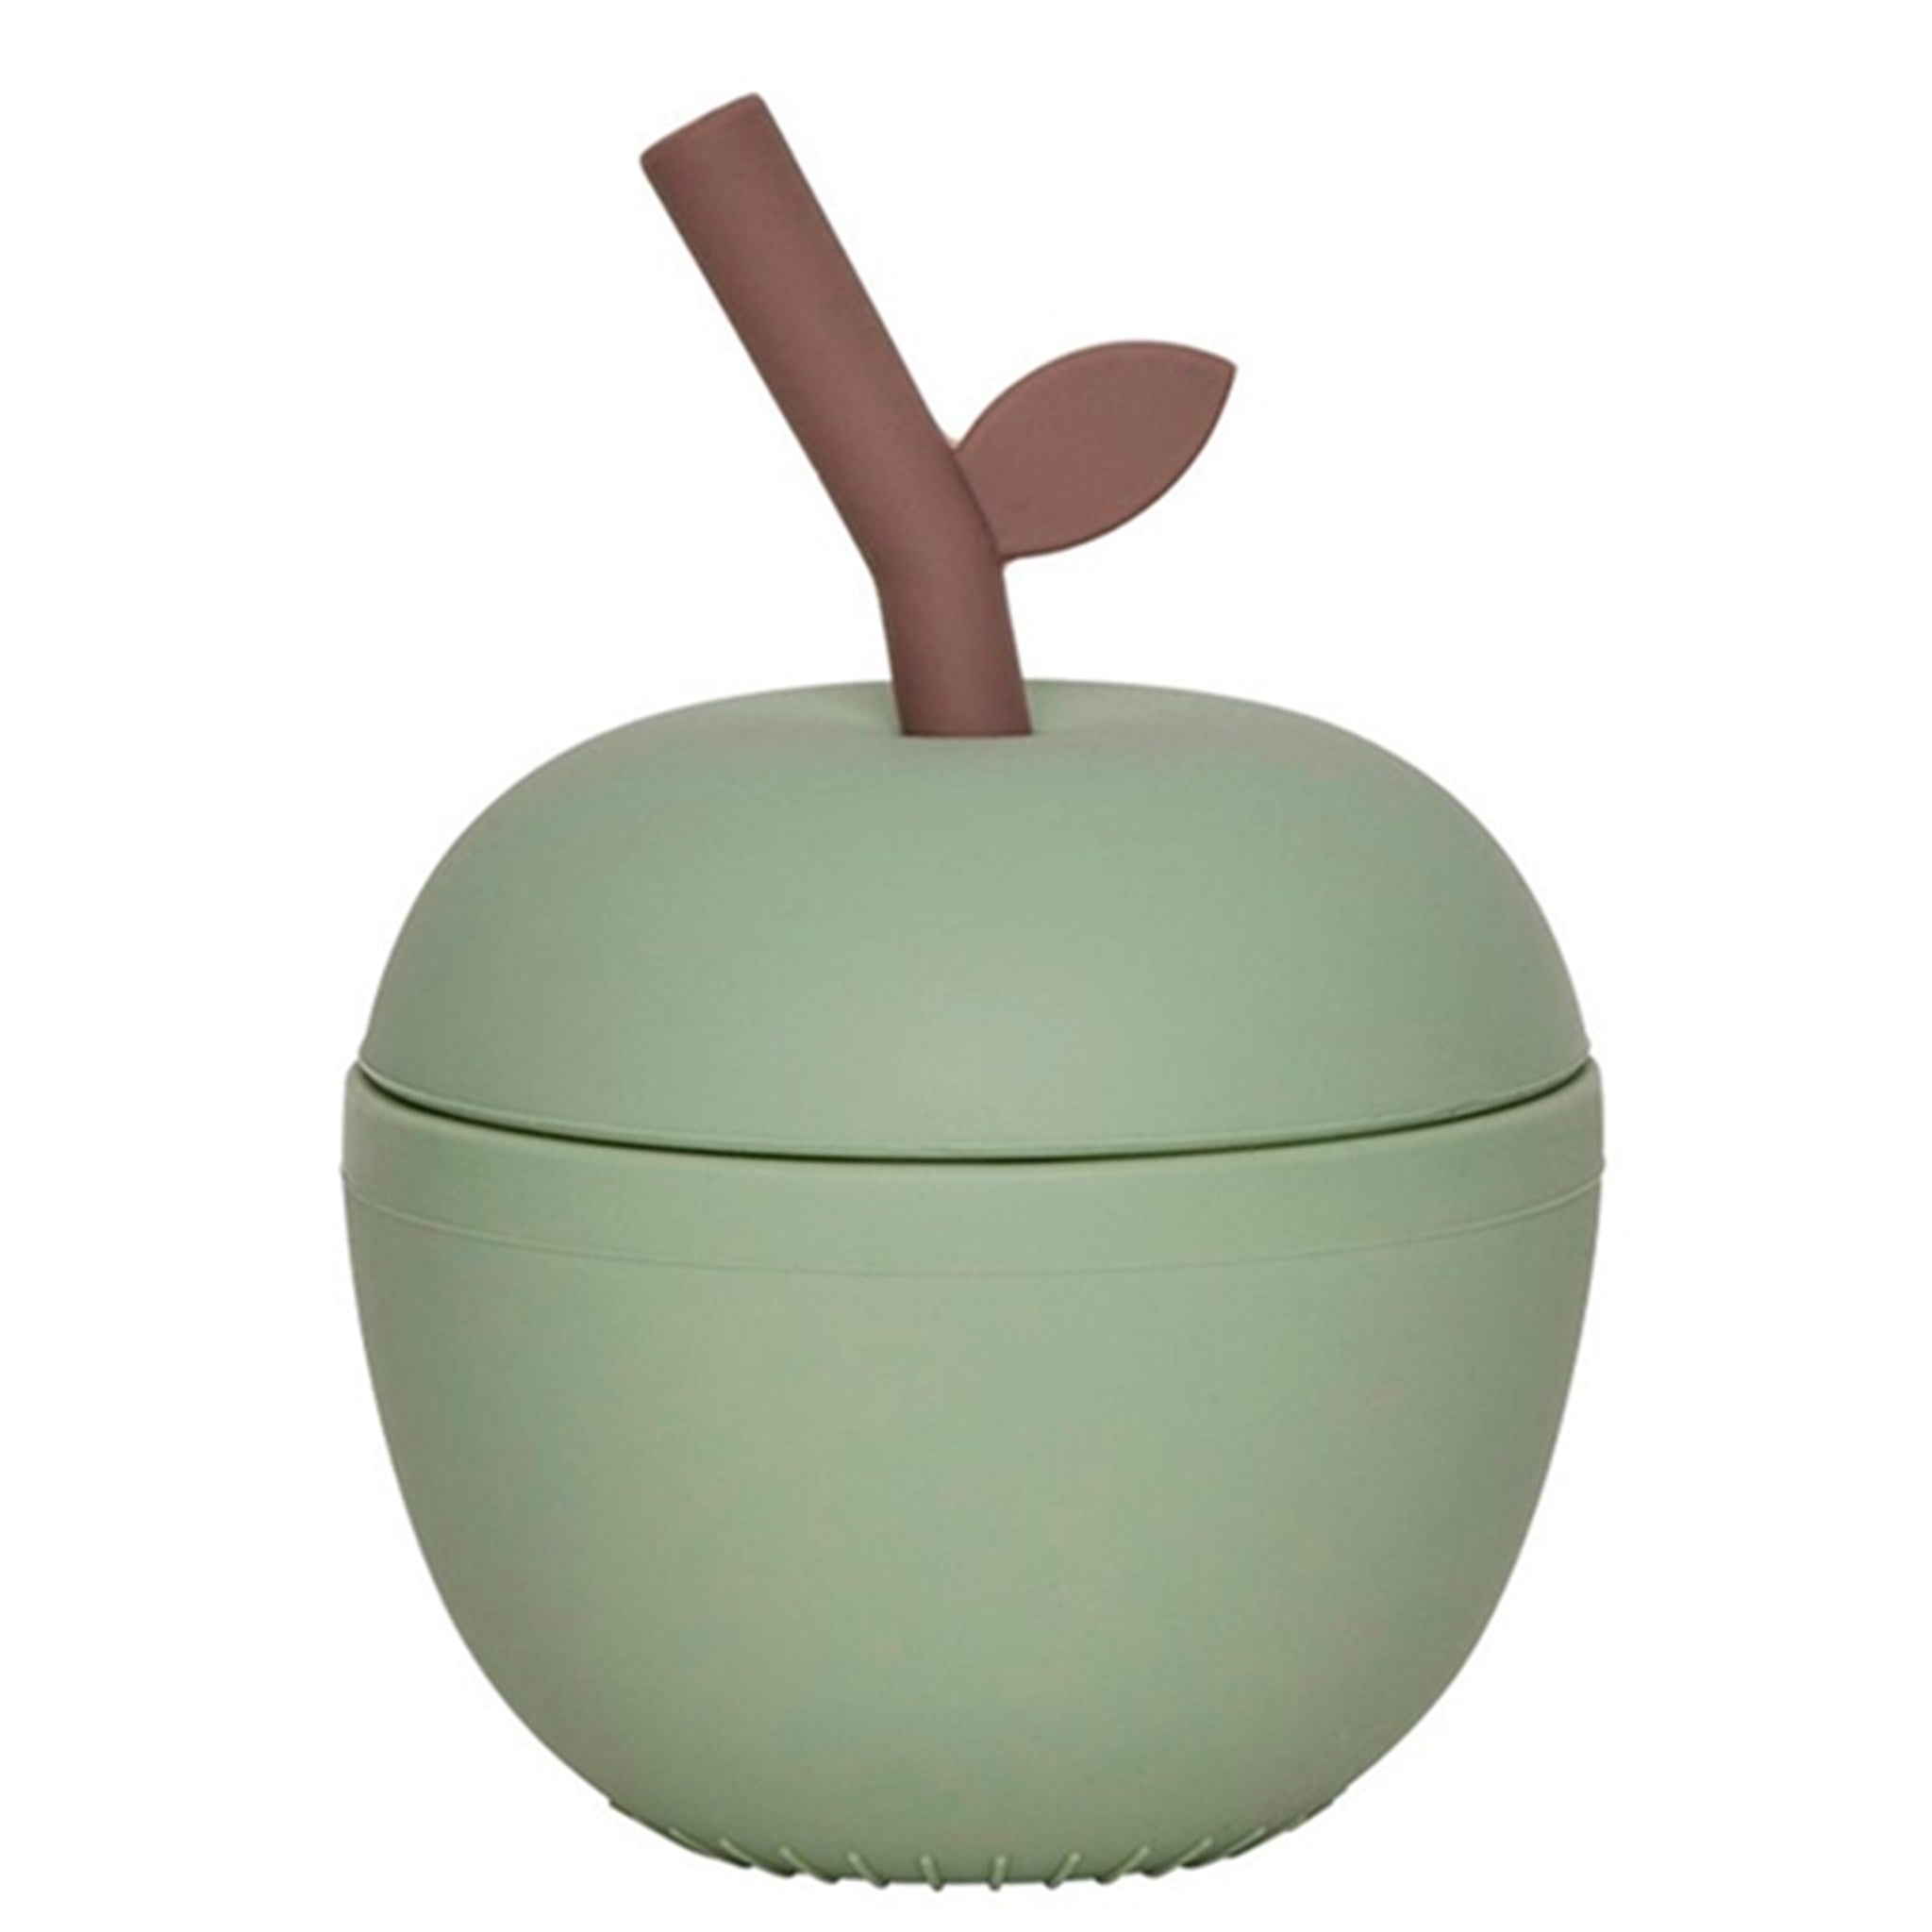 OYOY Apple Cup Green